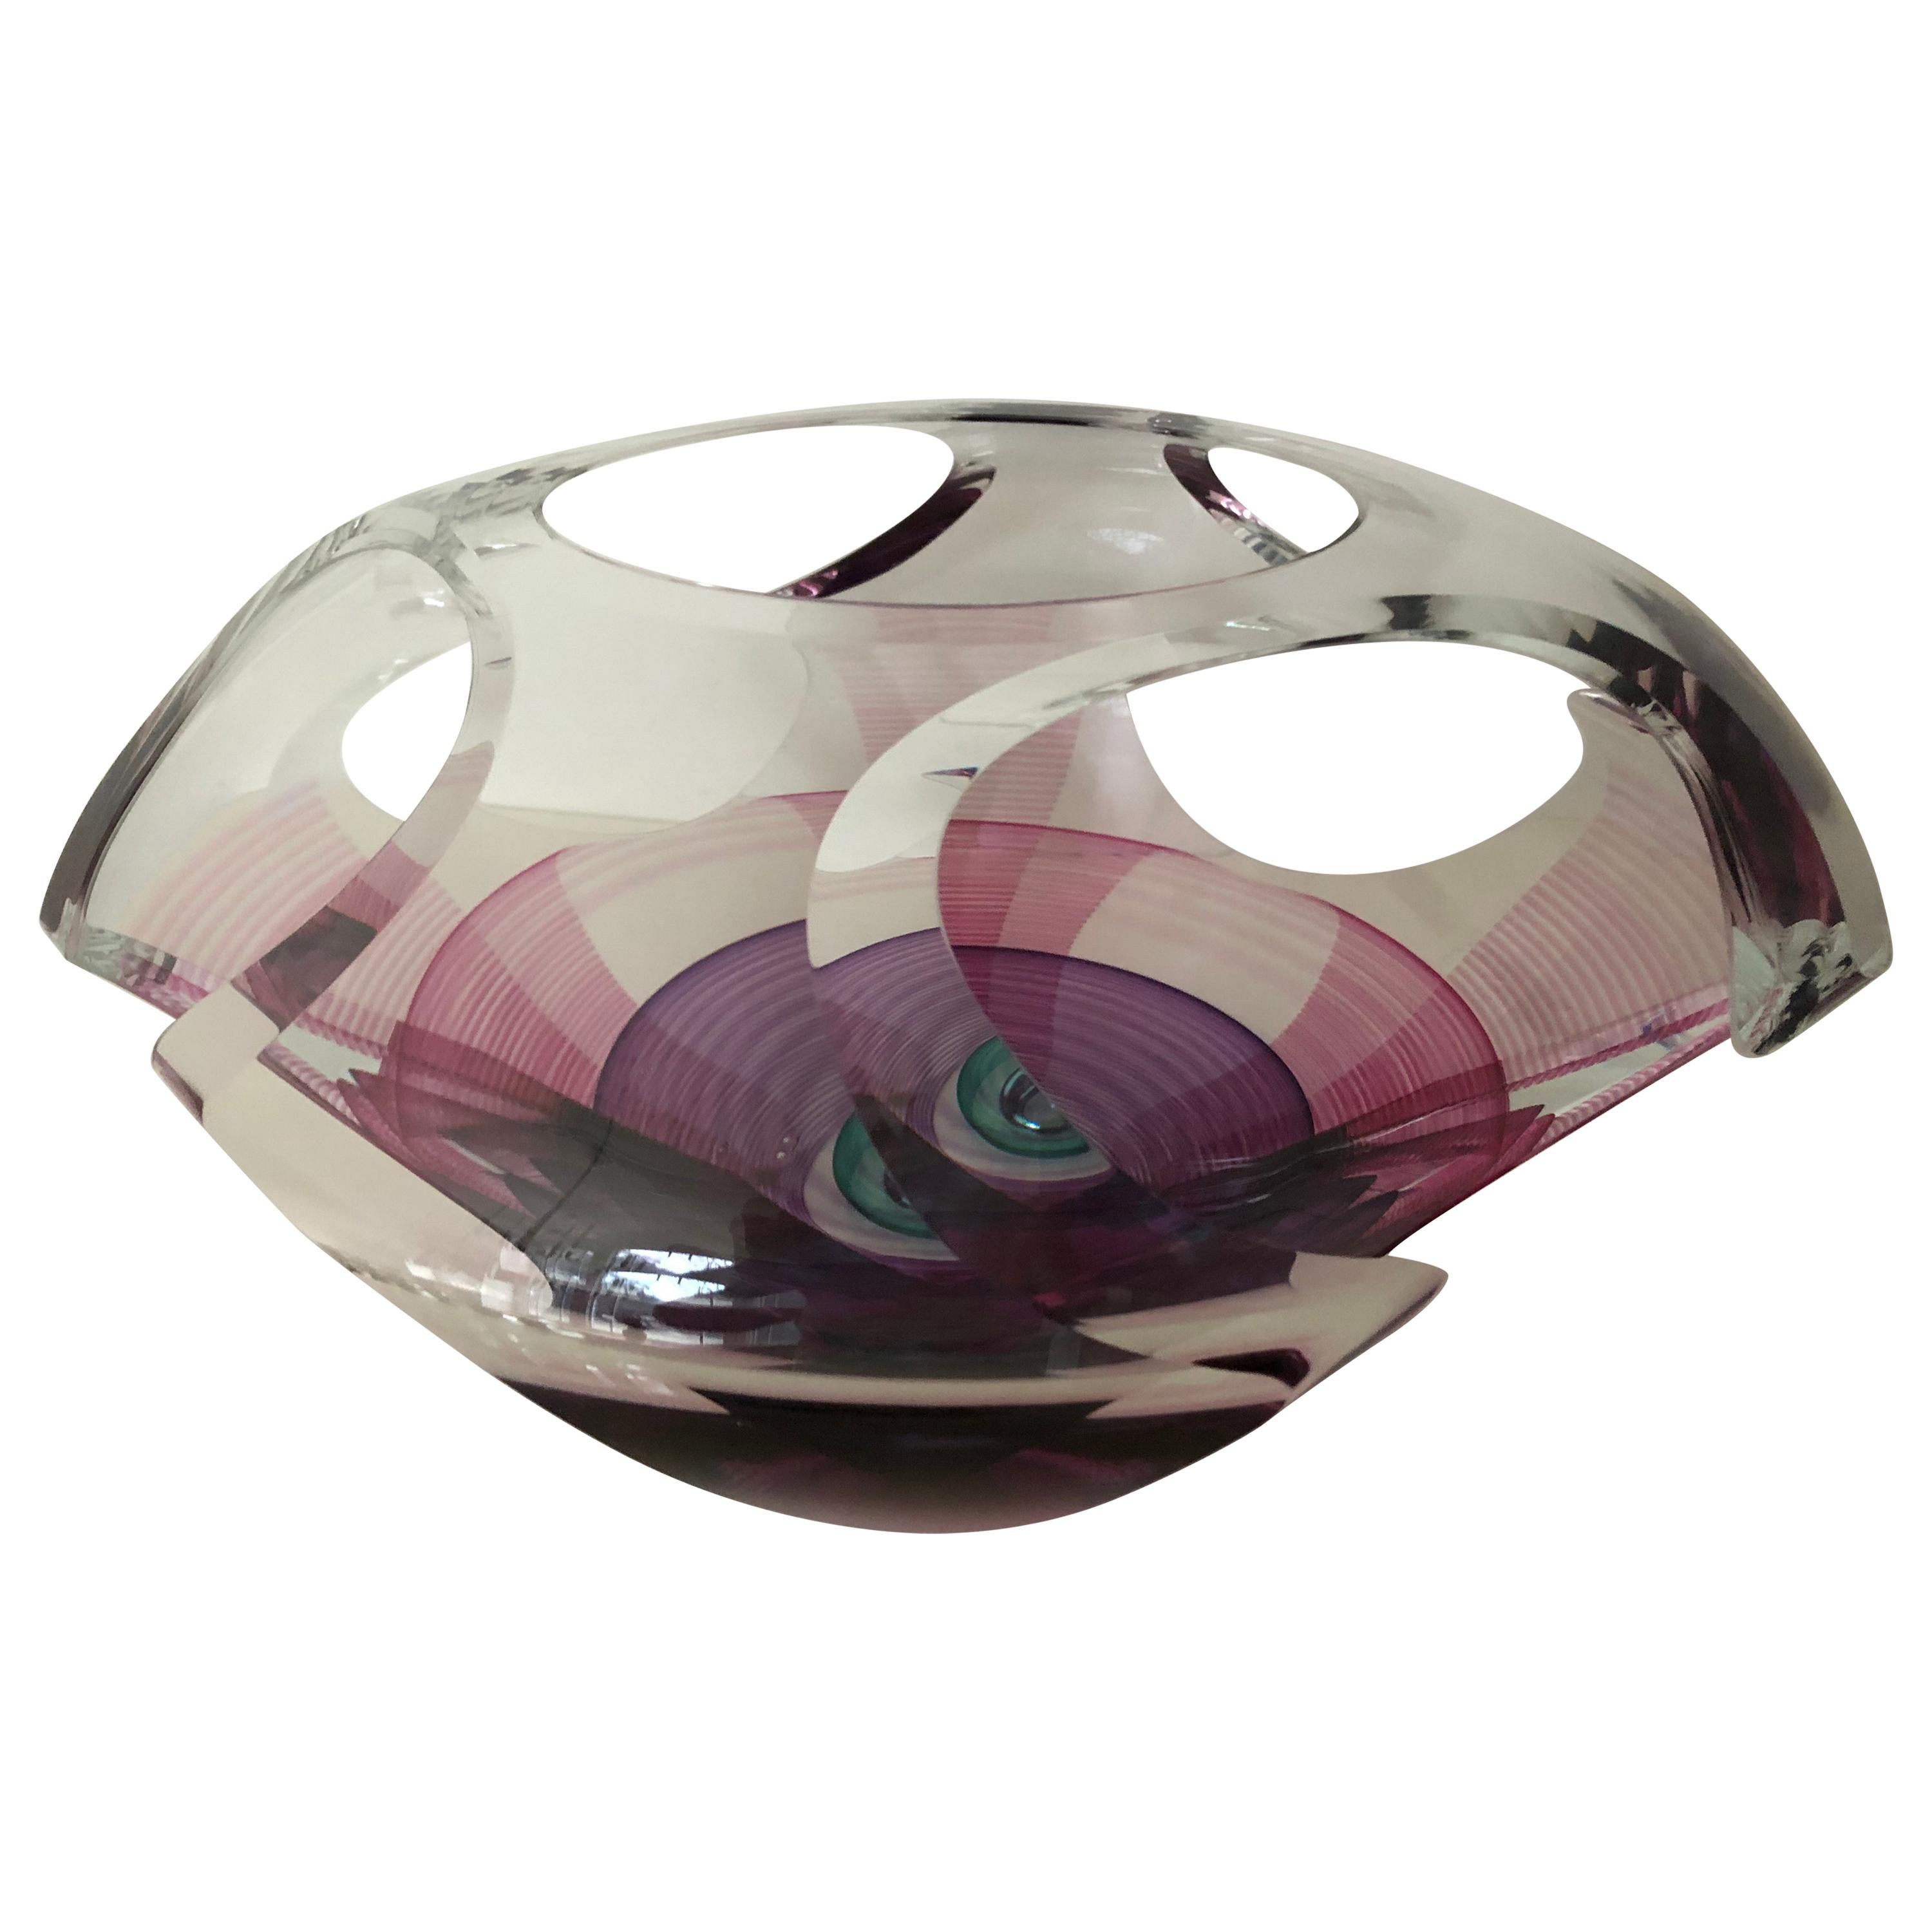 Contemporary Glass Kit Karbler Michael David Vortex Sculpture / Bowl